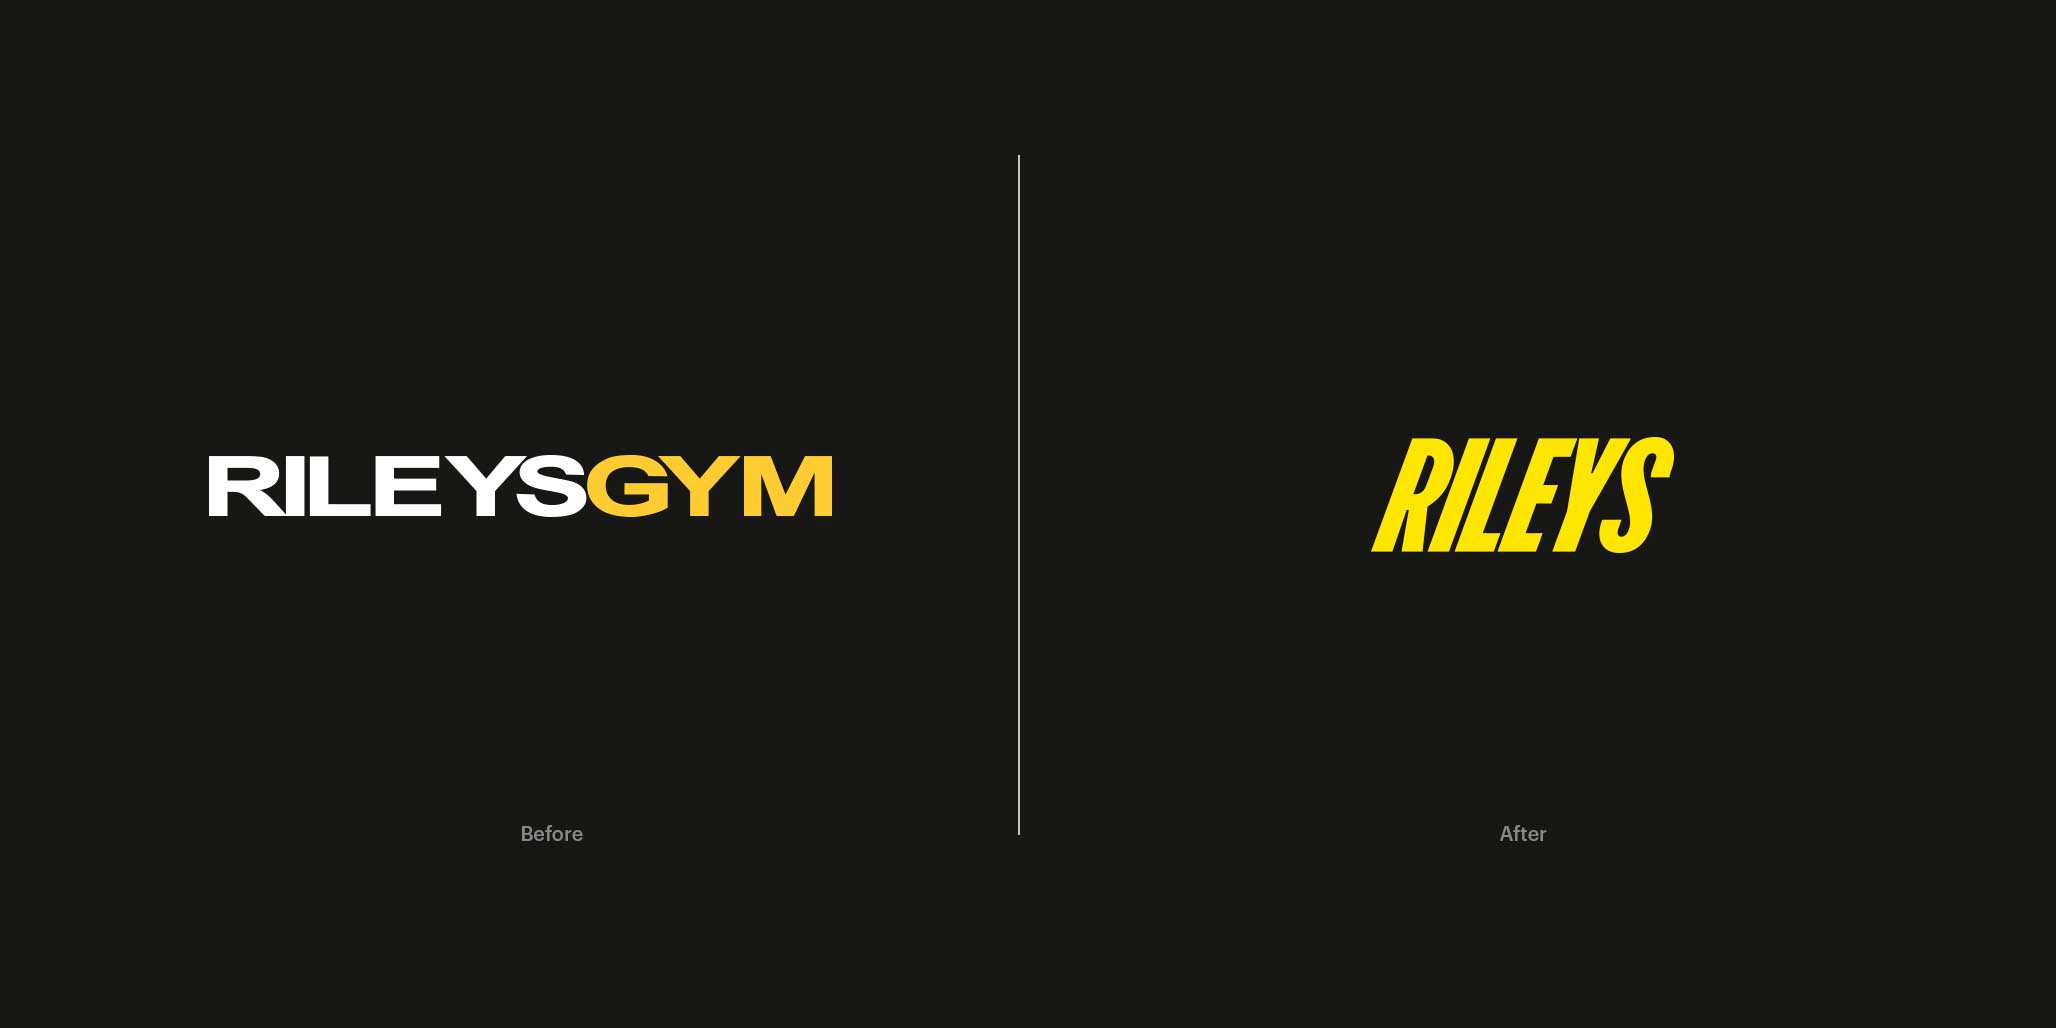 Brand identity design for Rileys Gym by Australian branding agency, Percept, image B